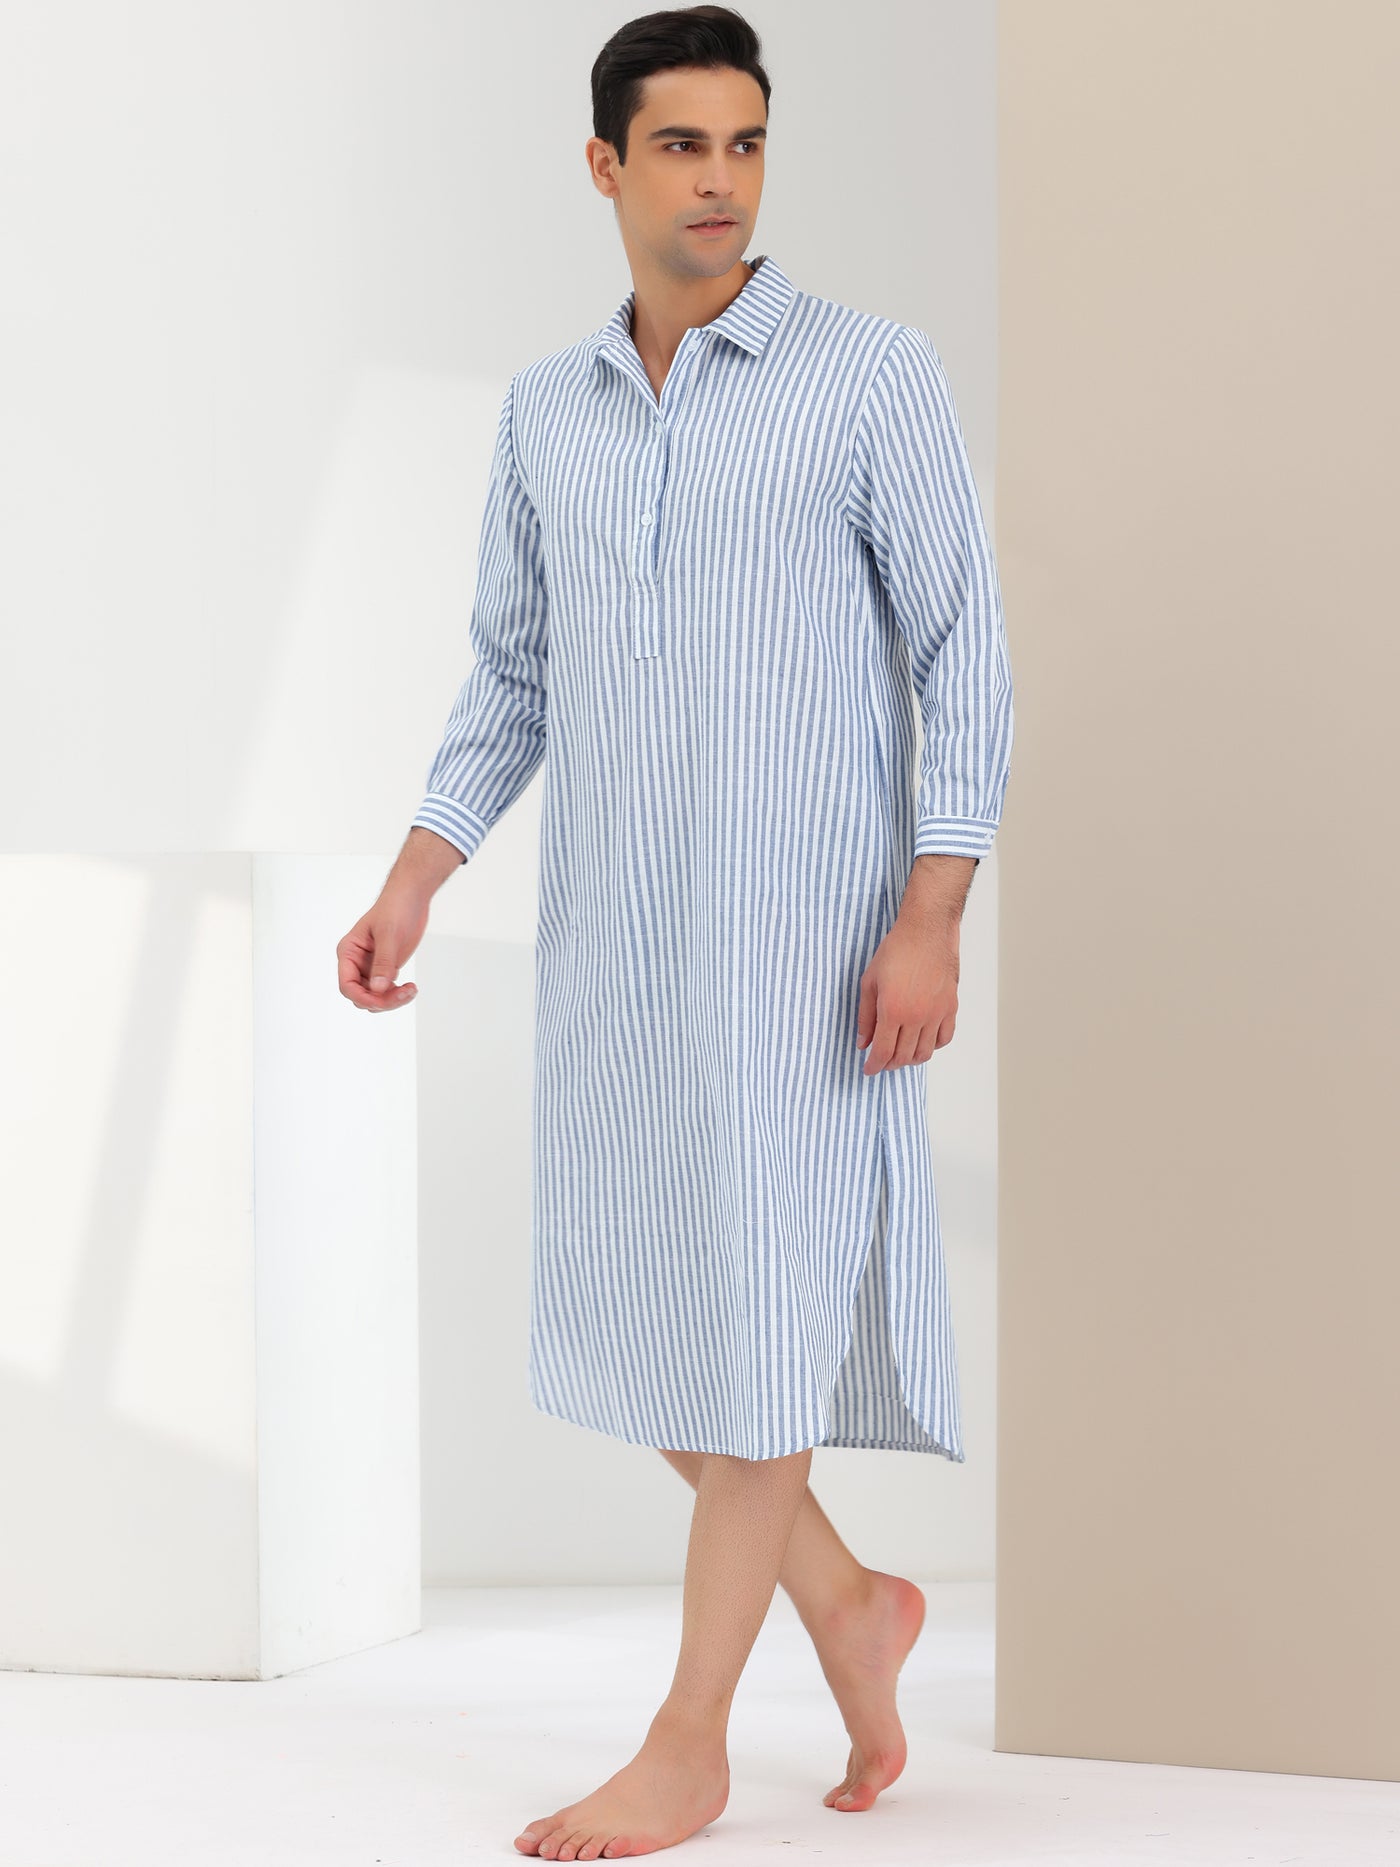 Bublédon Men's Striped Nightshirts Long Sleeves Sleep Nightgown Pajamas Shirts